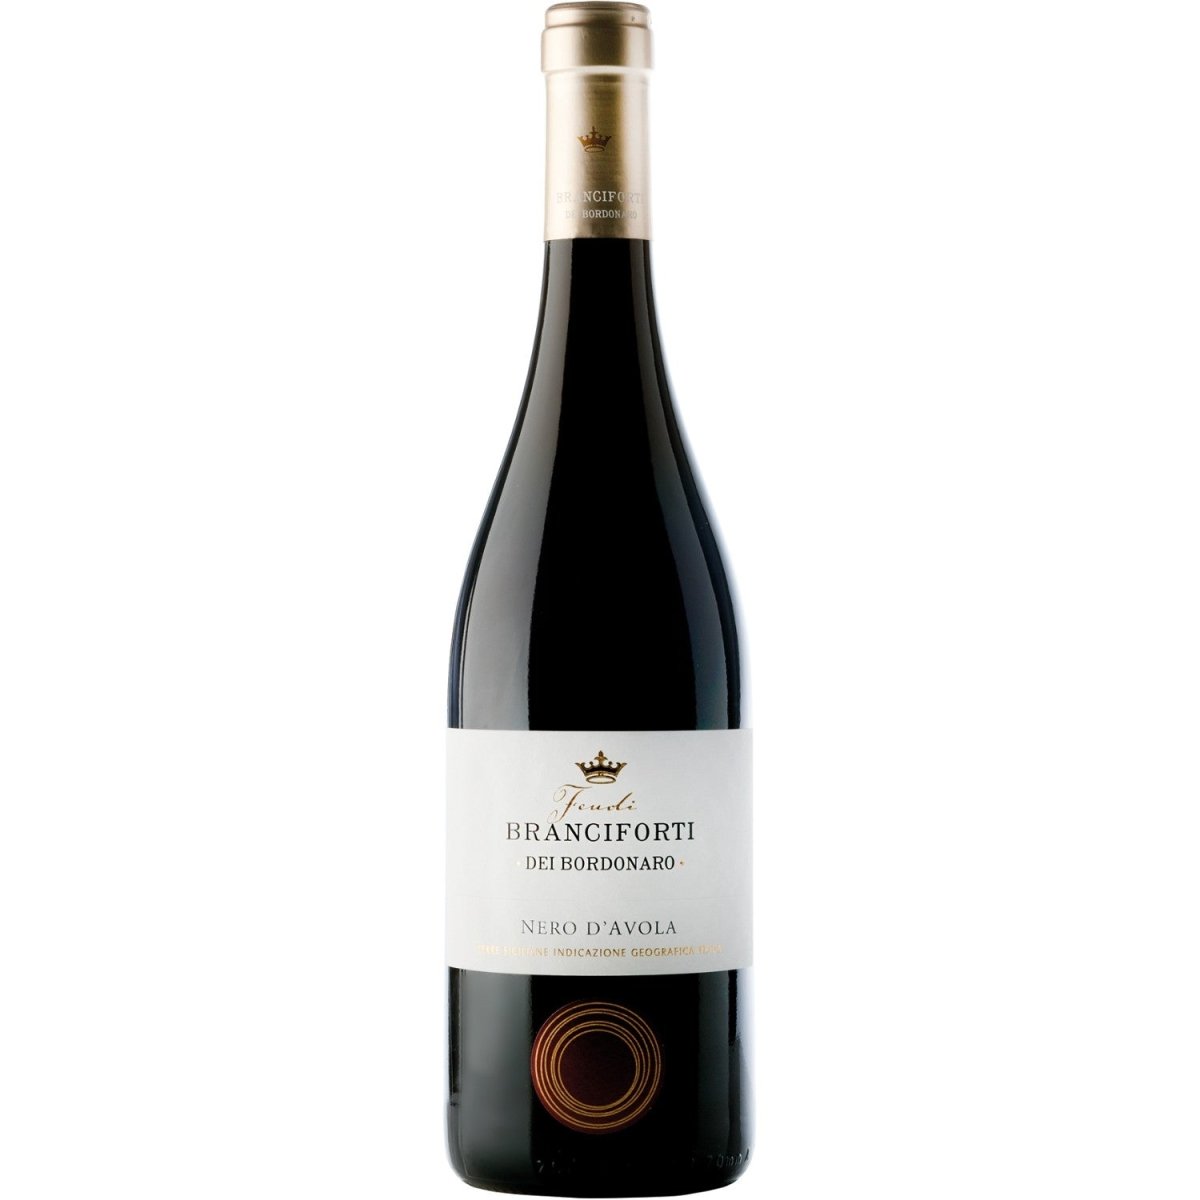 Branciforti dei Bordonaro Nero d'Avola Terre Siciliane IGT Rotwein Wein Italien (6 x 0.75l) - Versanel -